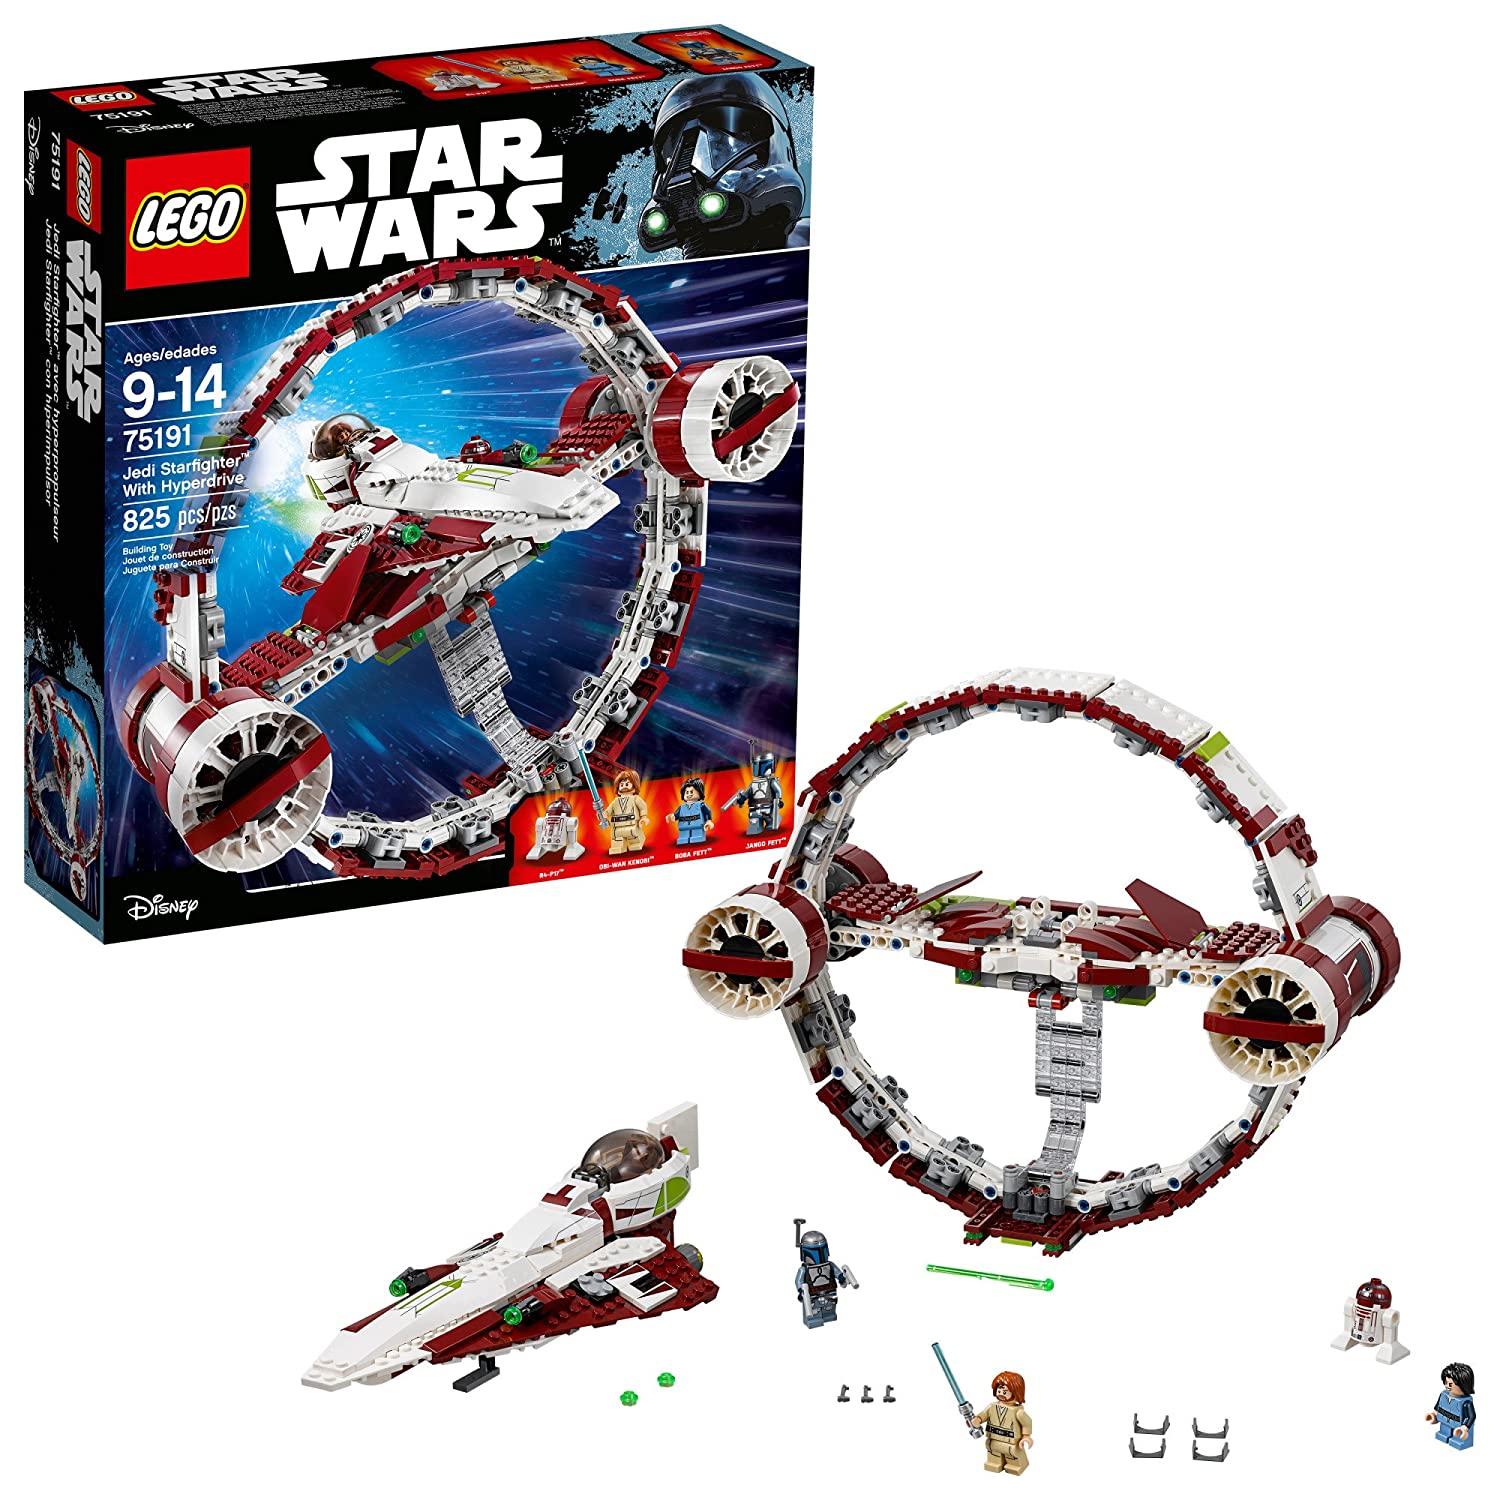 LEGO 6175769 Star Wars Jedi Starfighter with Hyperdrive 75191 Building Kit (825 Piece)